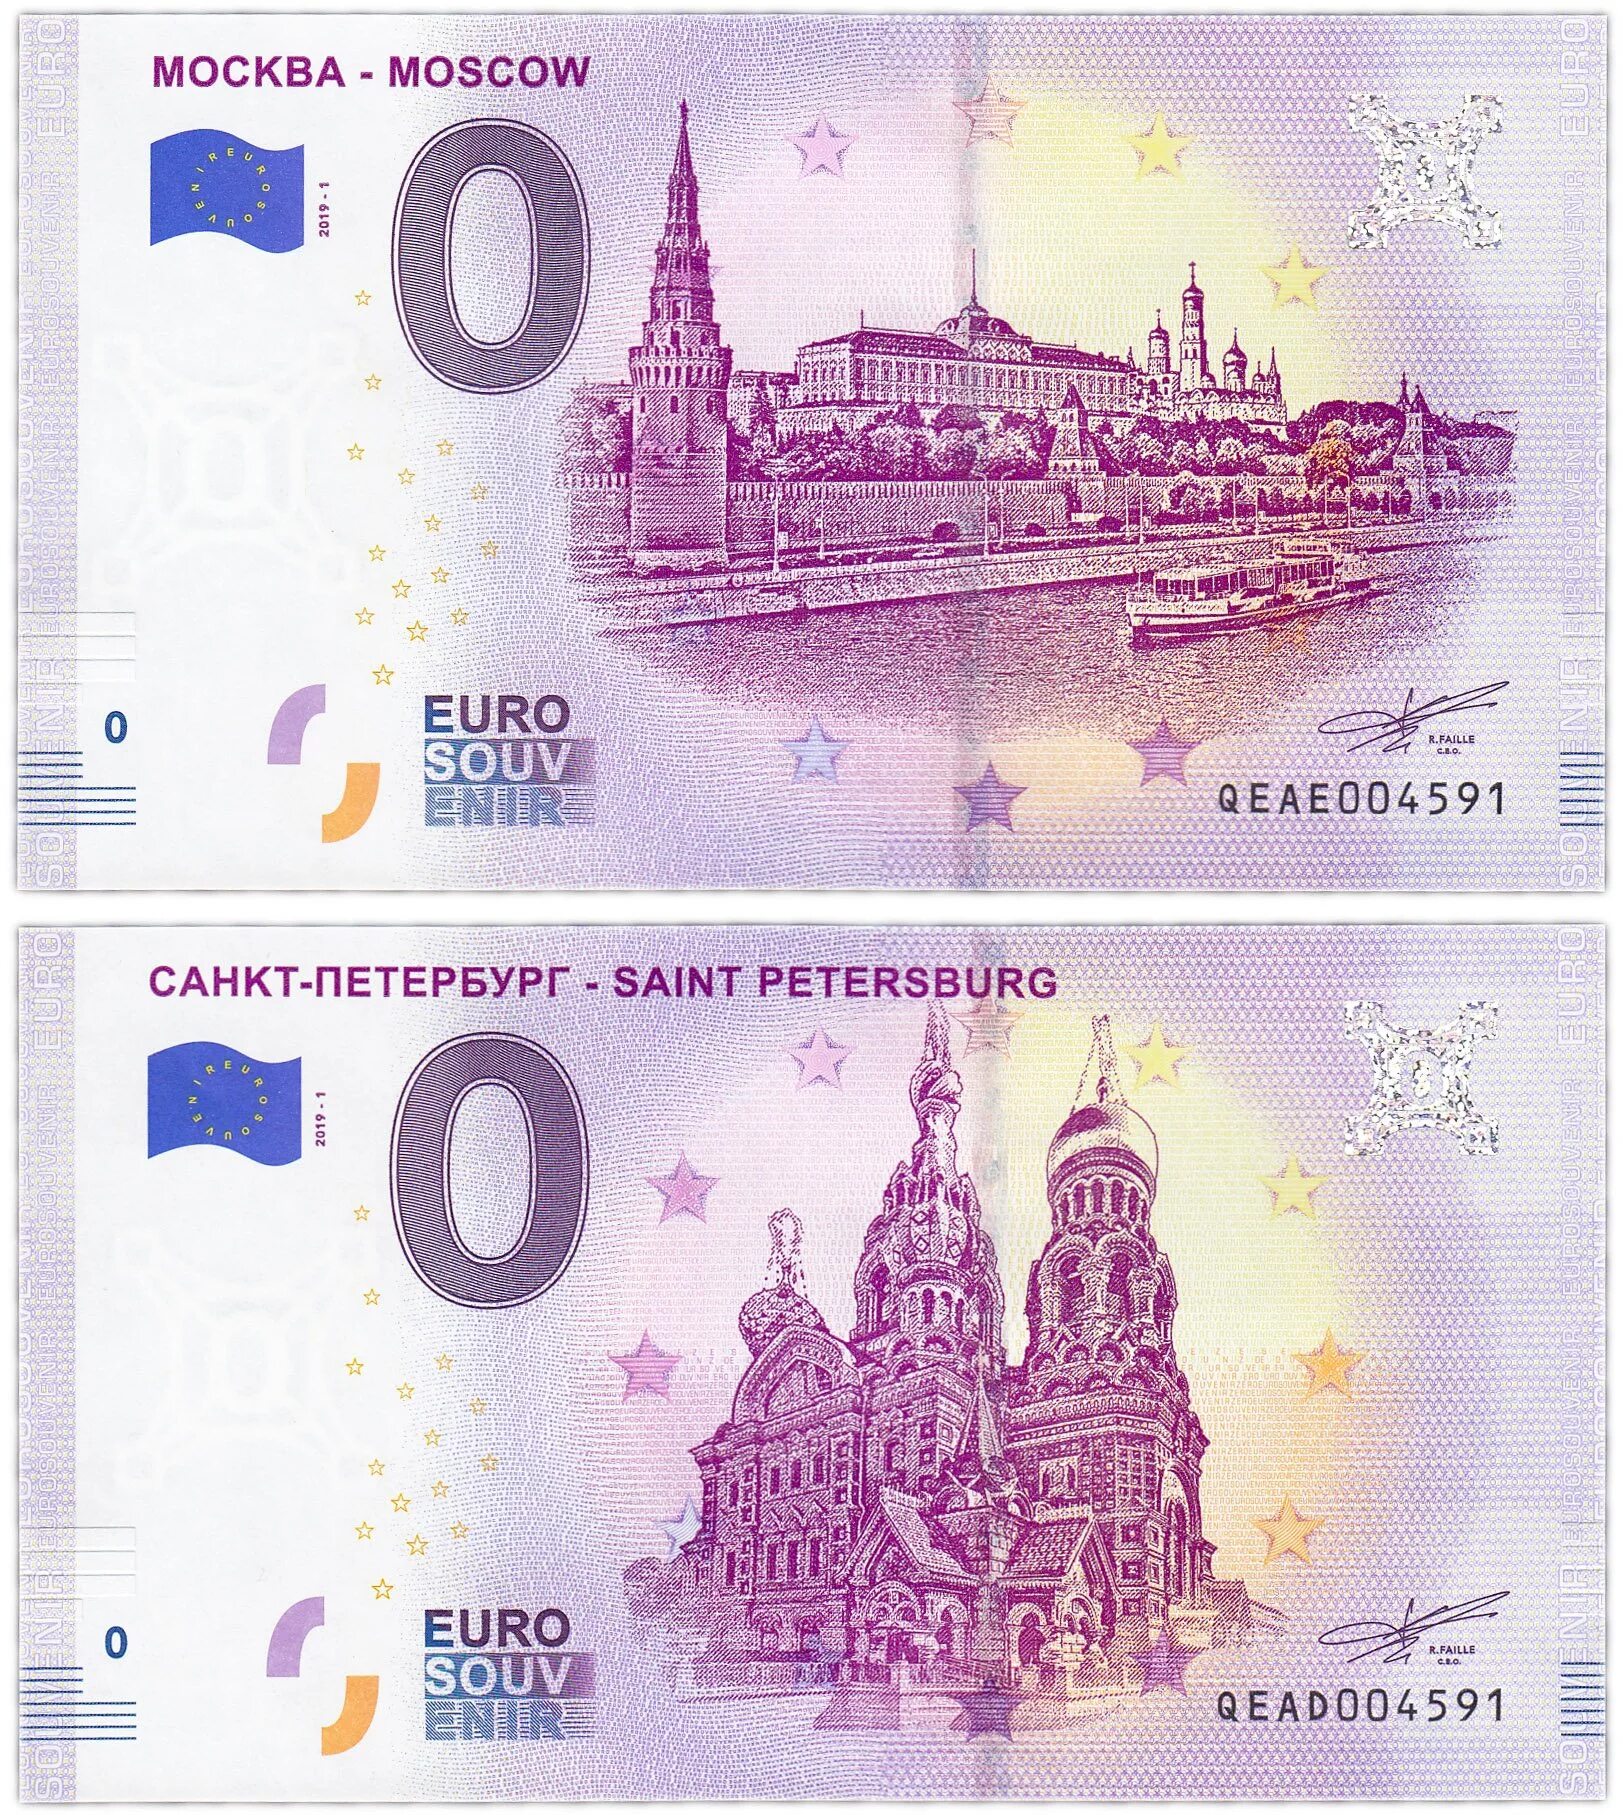 0 Евро банкнота. Ноль евро купюра. Москва купюра 0 евро. Сувенирные евро банкноты.